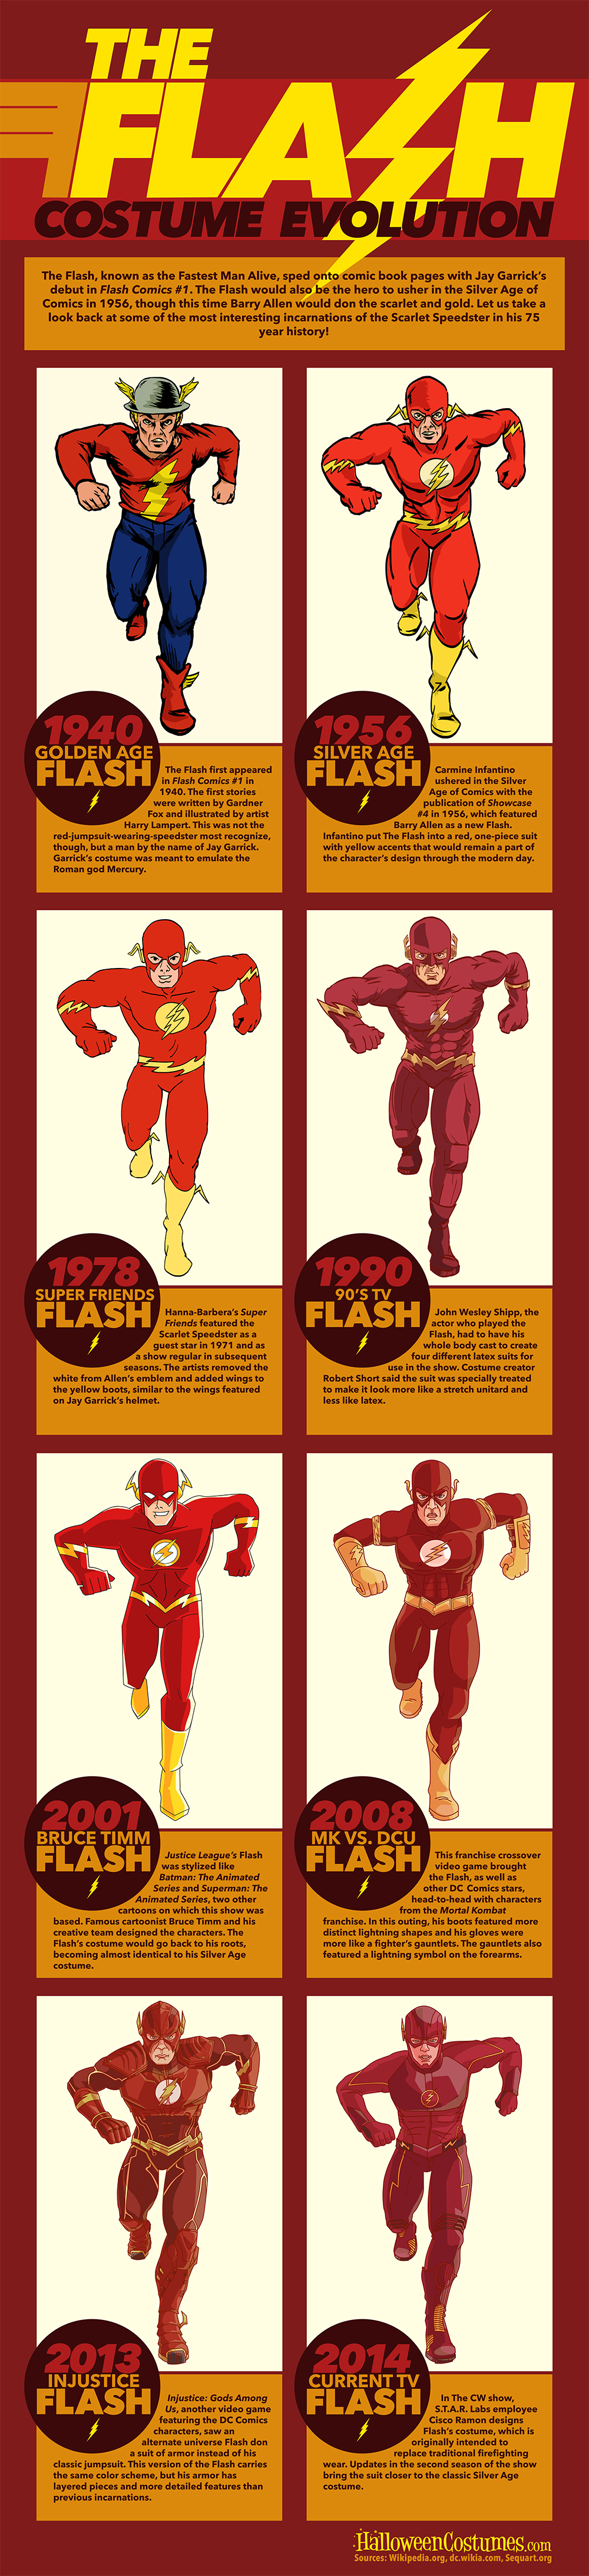  Evolution of the Flash